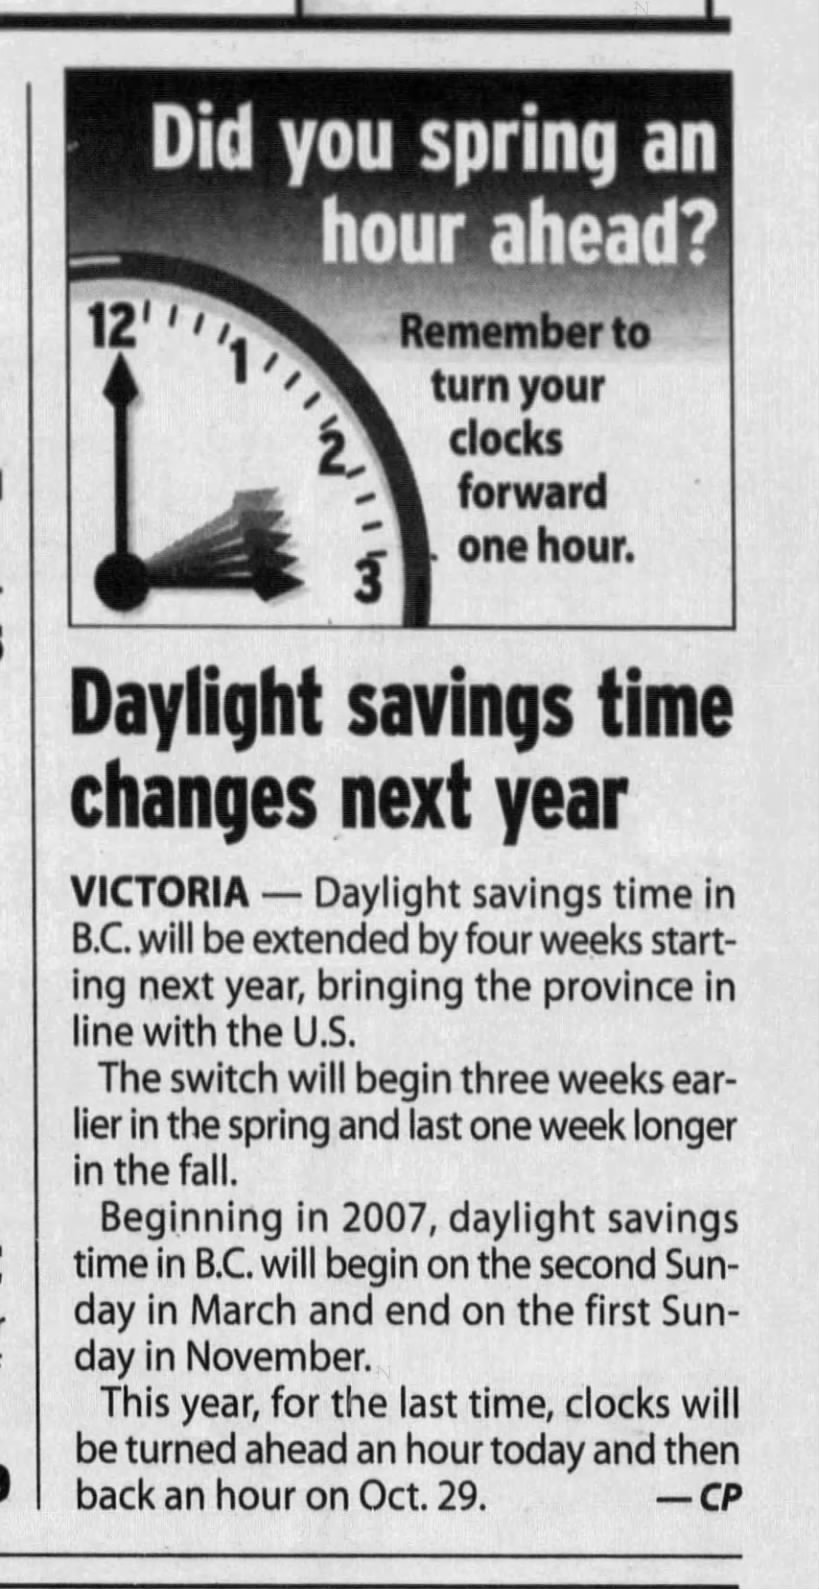 Daylight savings time changes next year